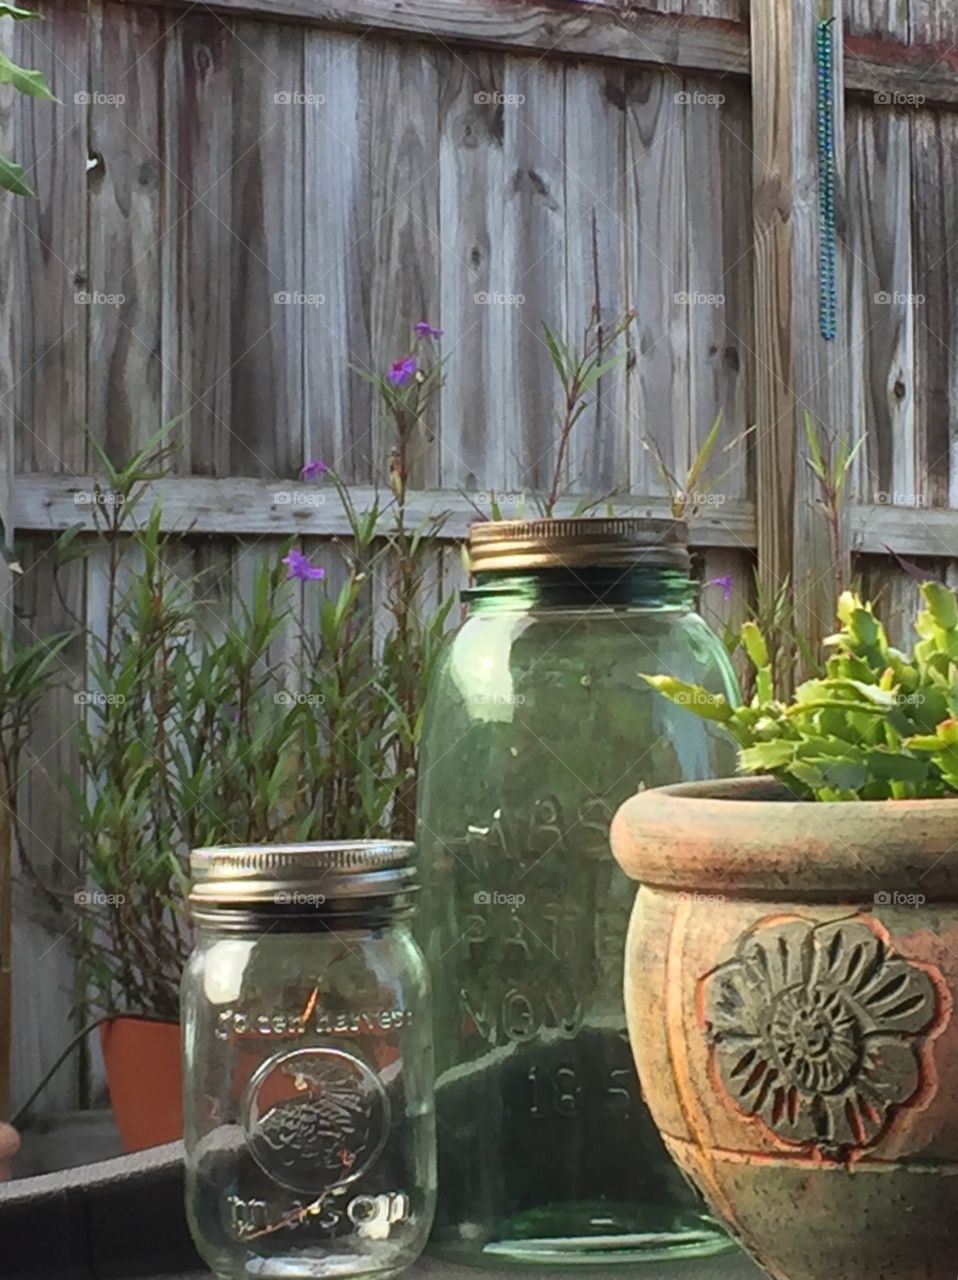 Texture. Color. Glass. Mason Jar. Garden Decor. Christmas Cactus. Clay  pot. Flower. Design. Wood fence. Rustic. Simplistic. Illuminated.